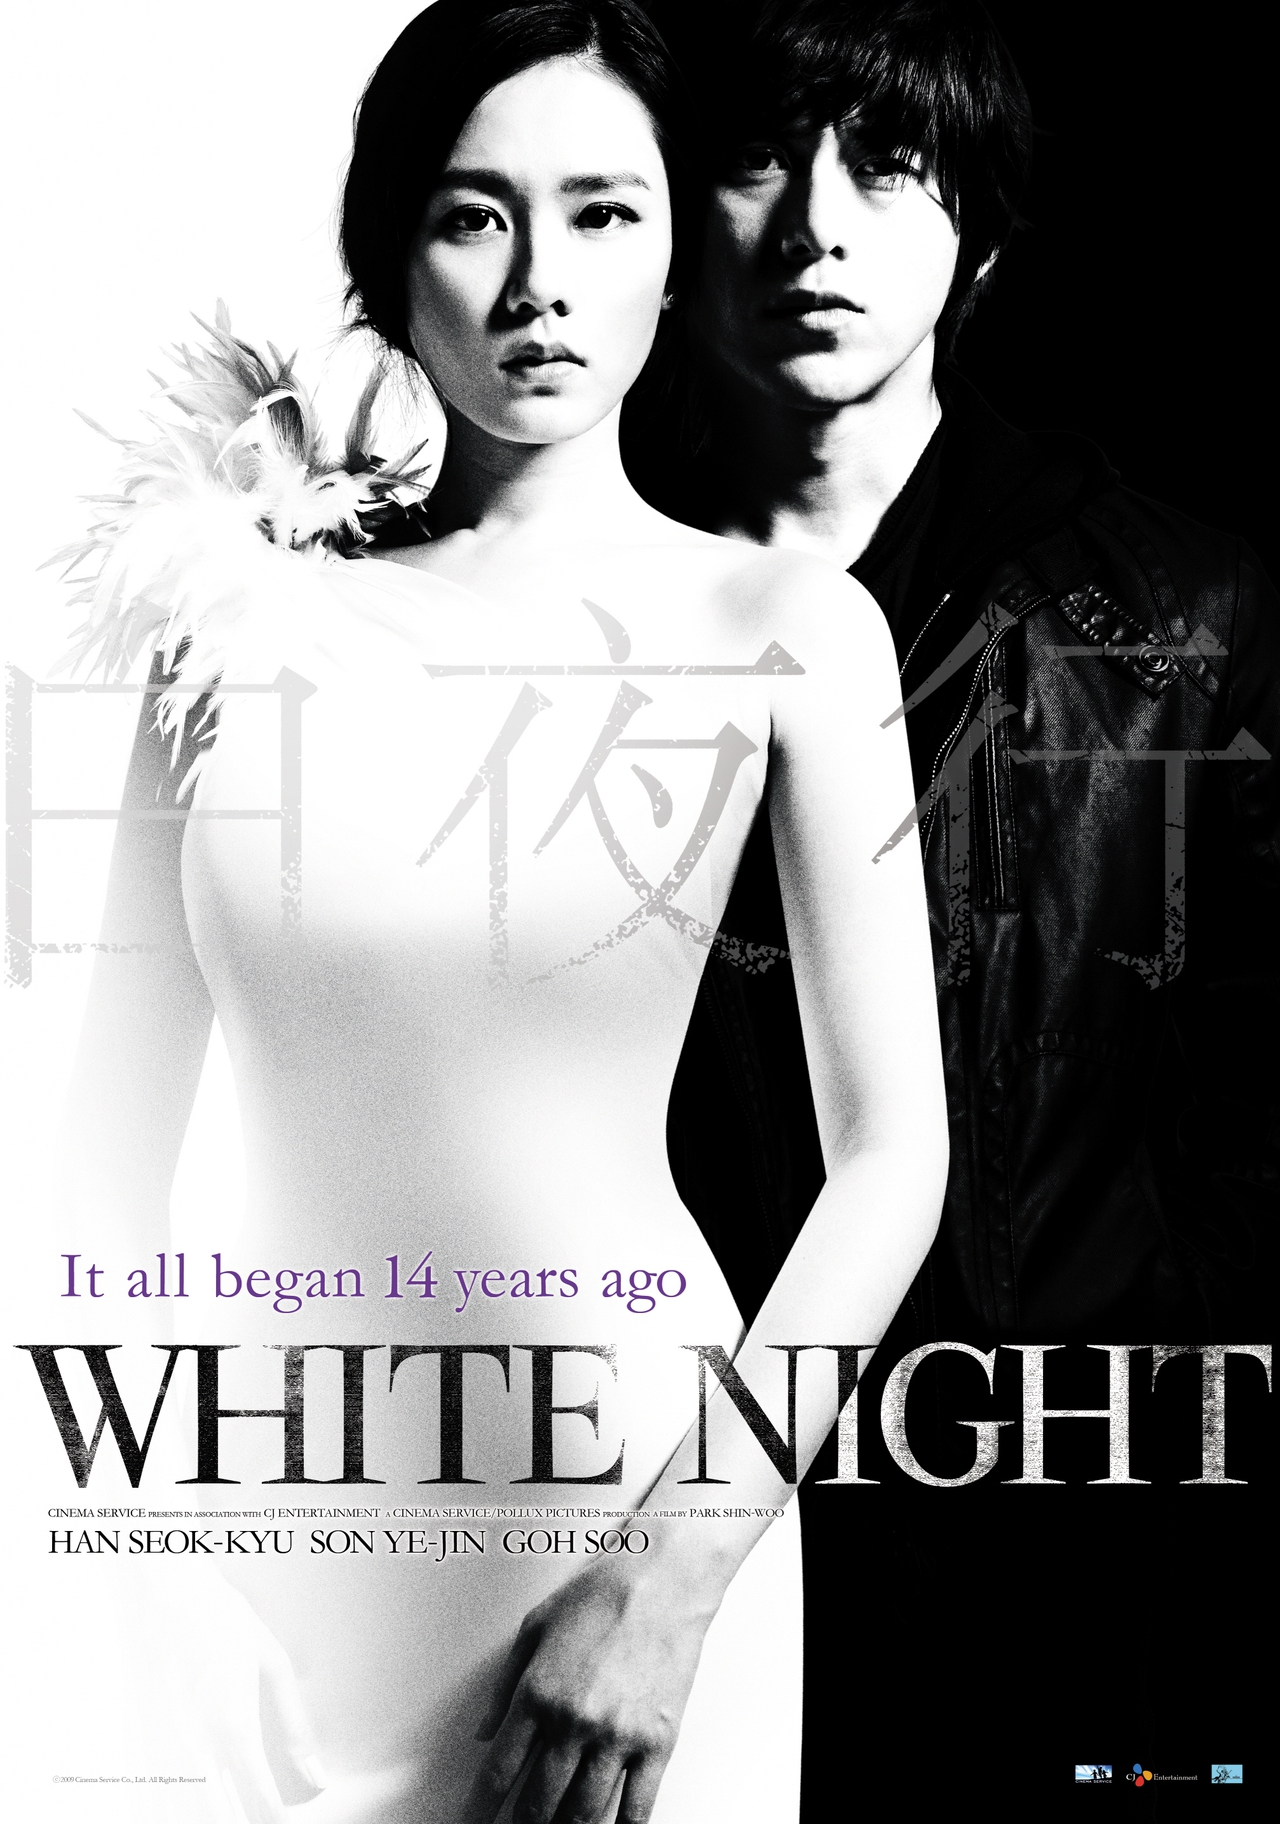 Ye-jin Son در صحنه فیلم سینمایی White Night به همراه Soo Go و Suk-kyu Han